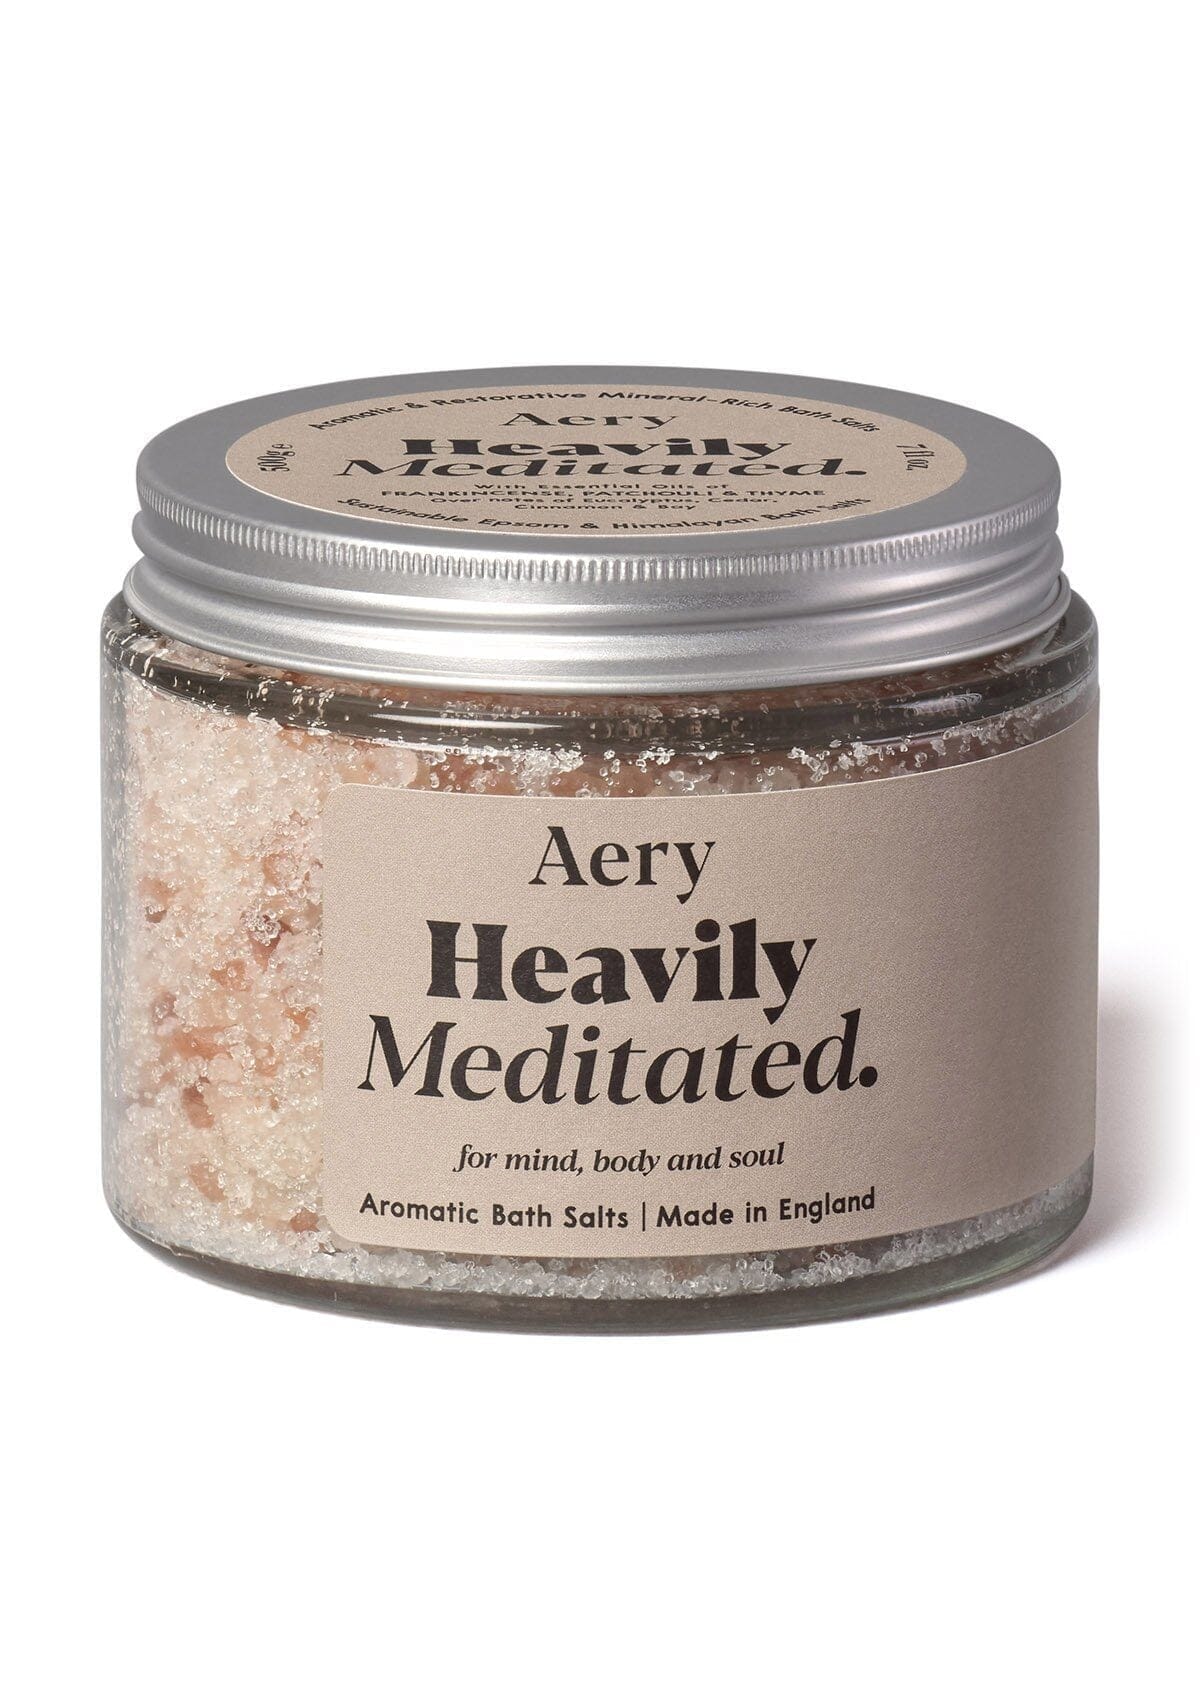 aery living heavily meditated bath salts in glass jar